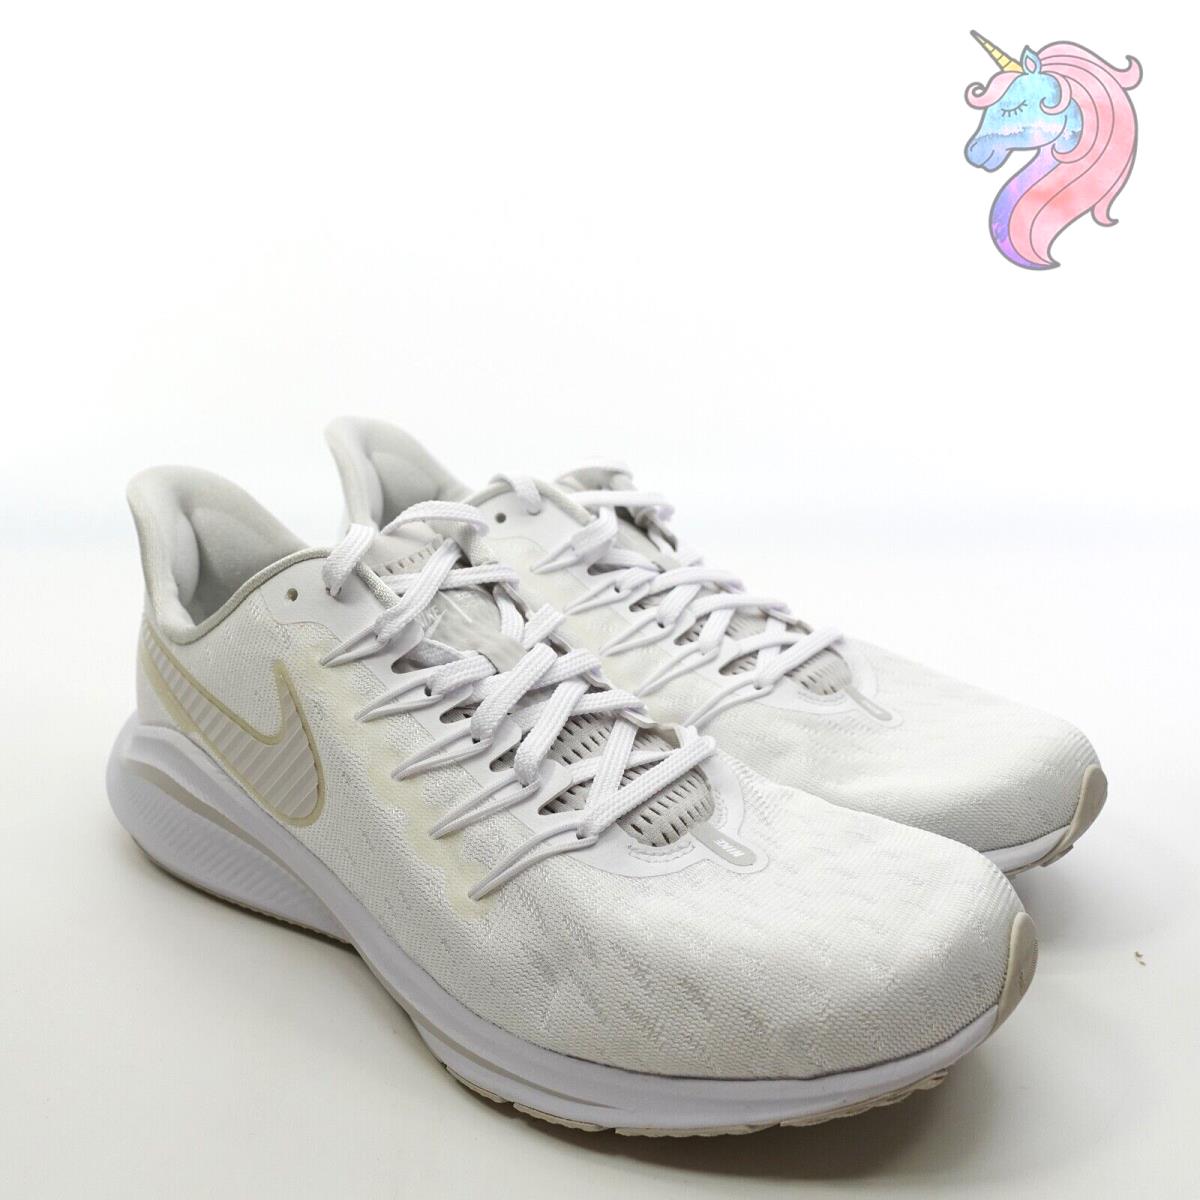 Nike shoes Air Zoom Vomero - White 5